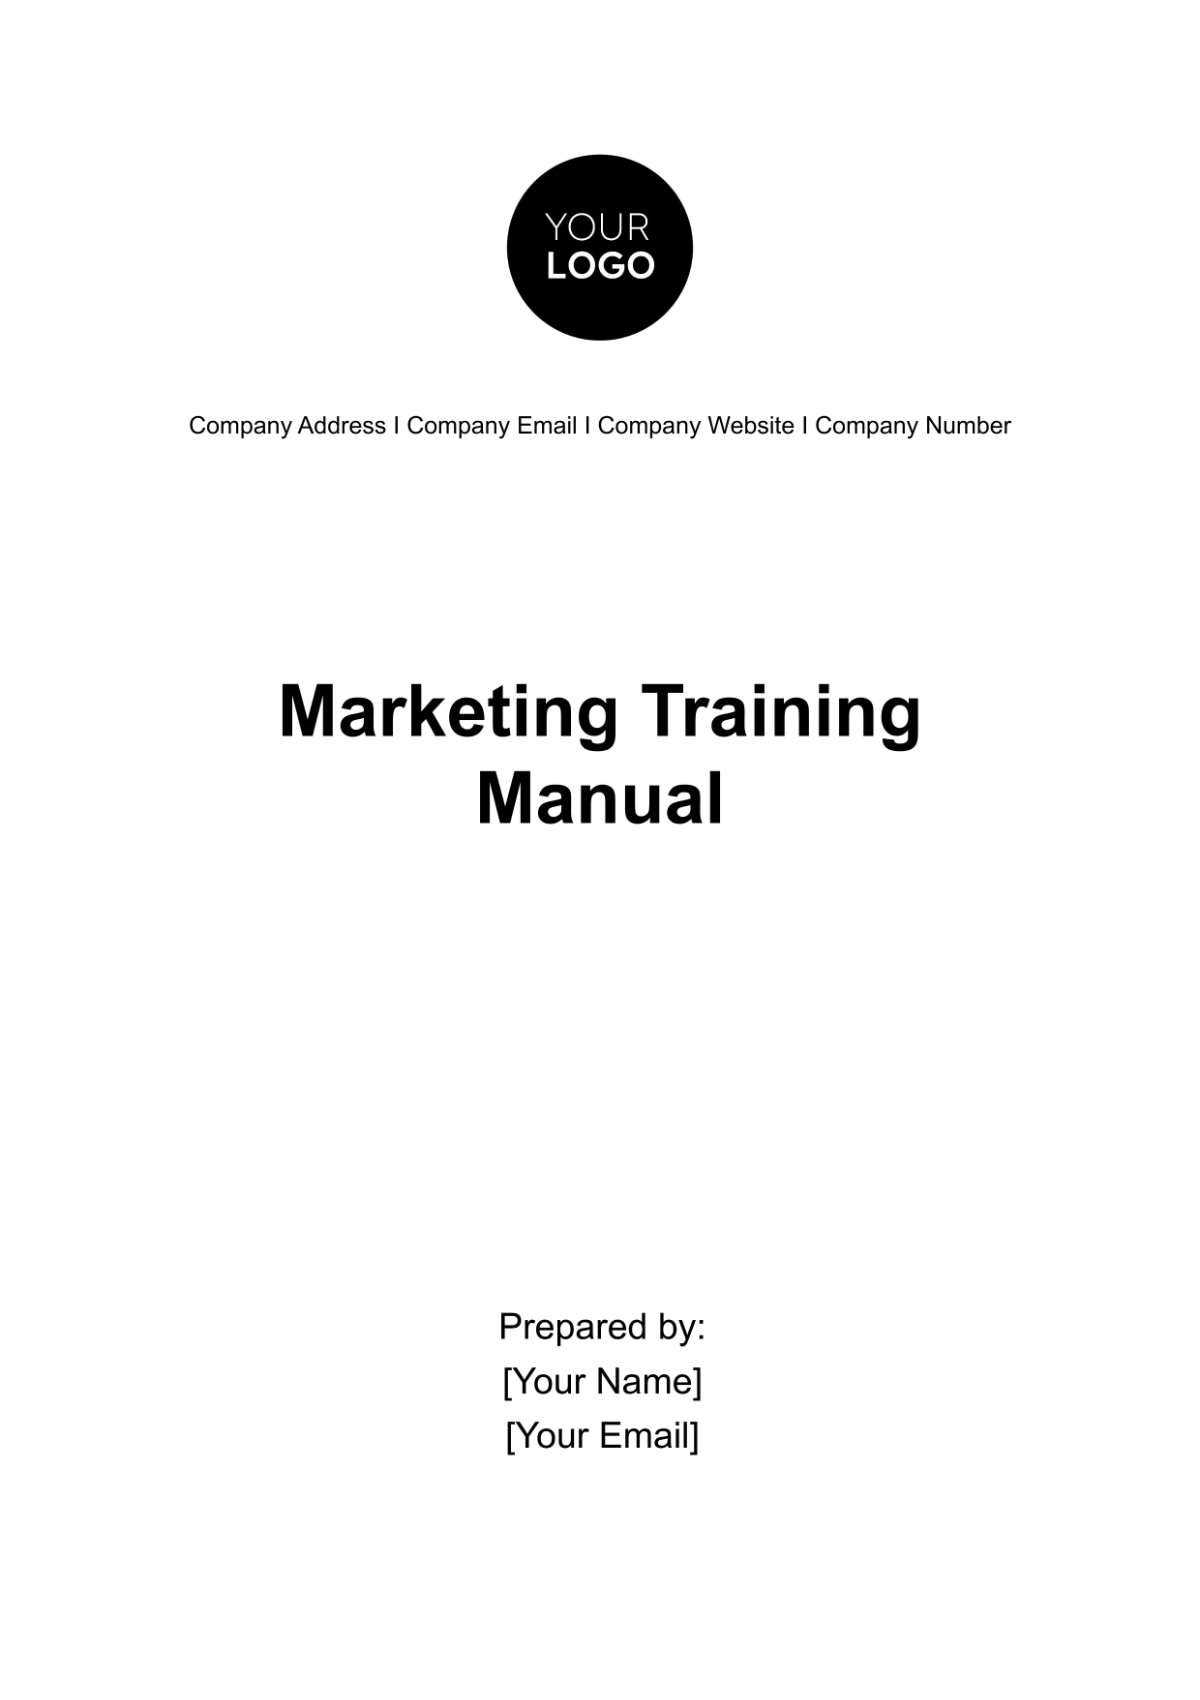 Free Marketing Training Manual Template